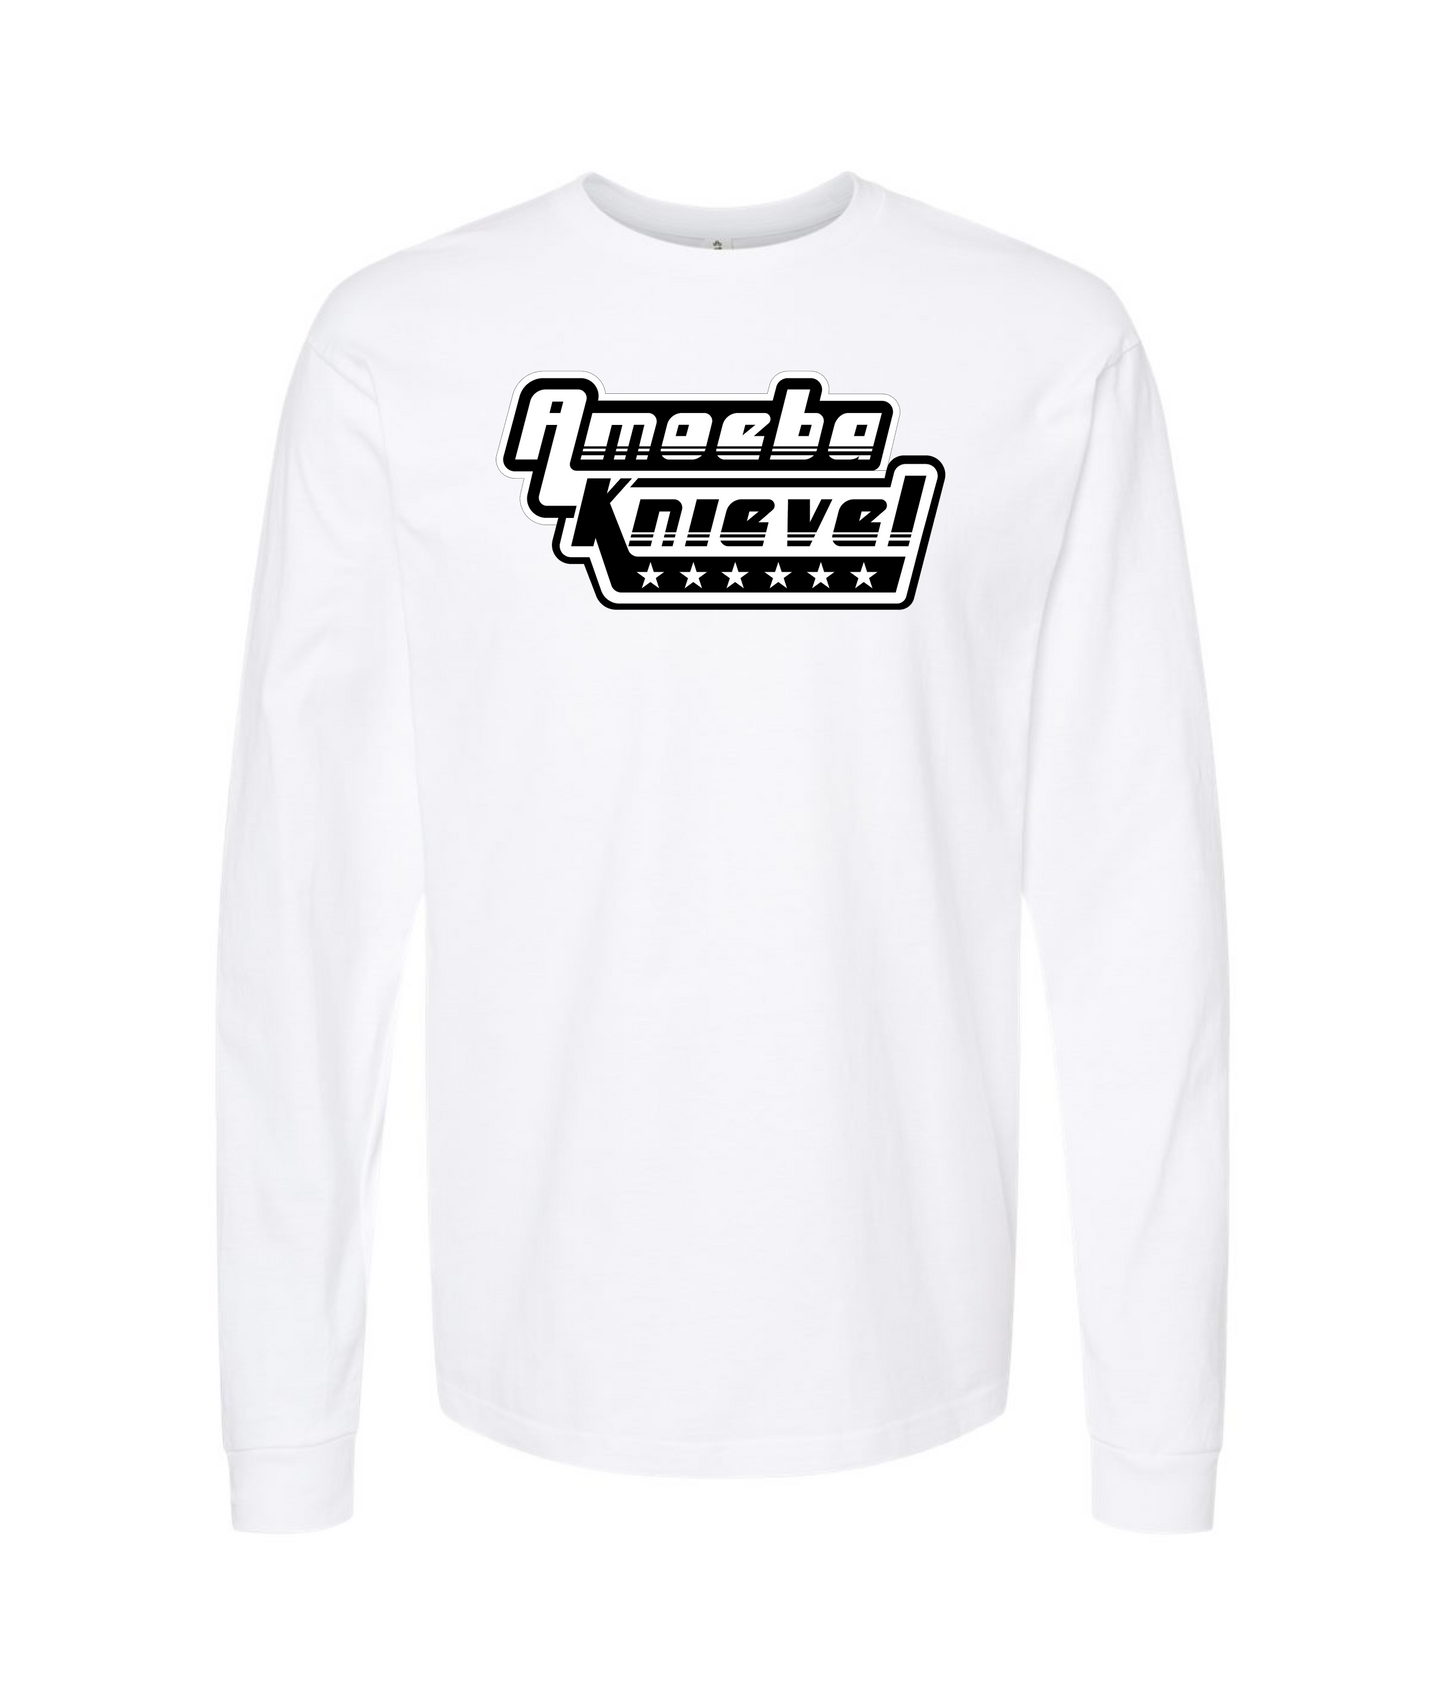 Amoeba Knievel Merch 'N Stuff - Logo - White Long Sleeve T